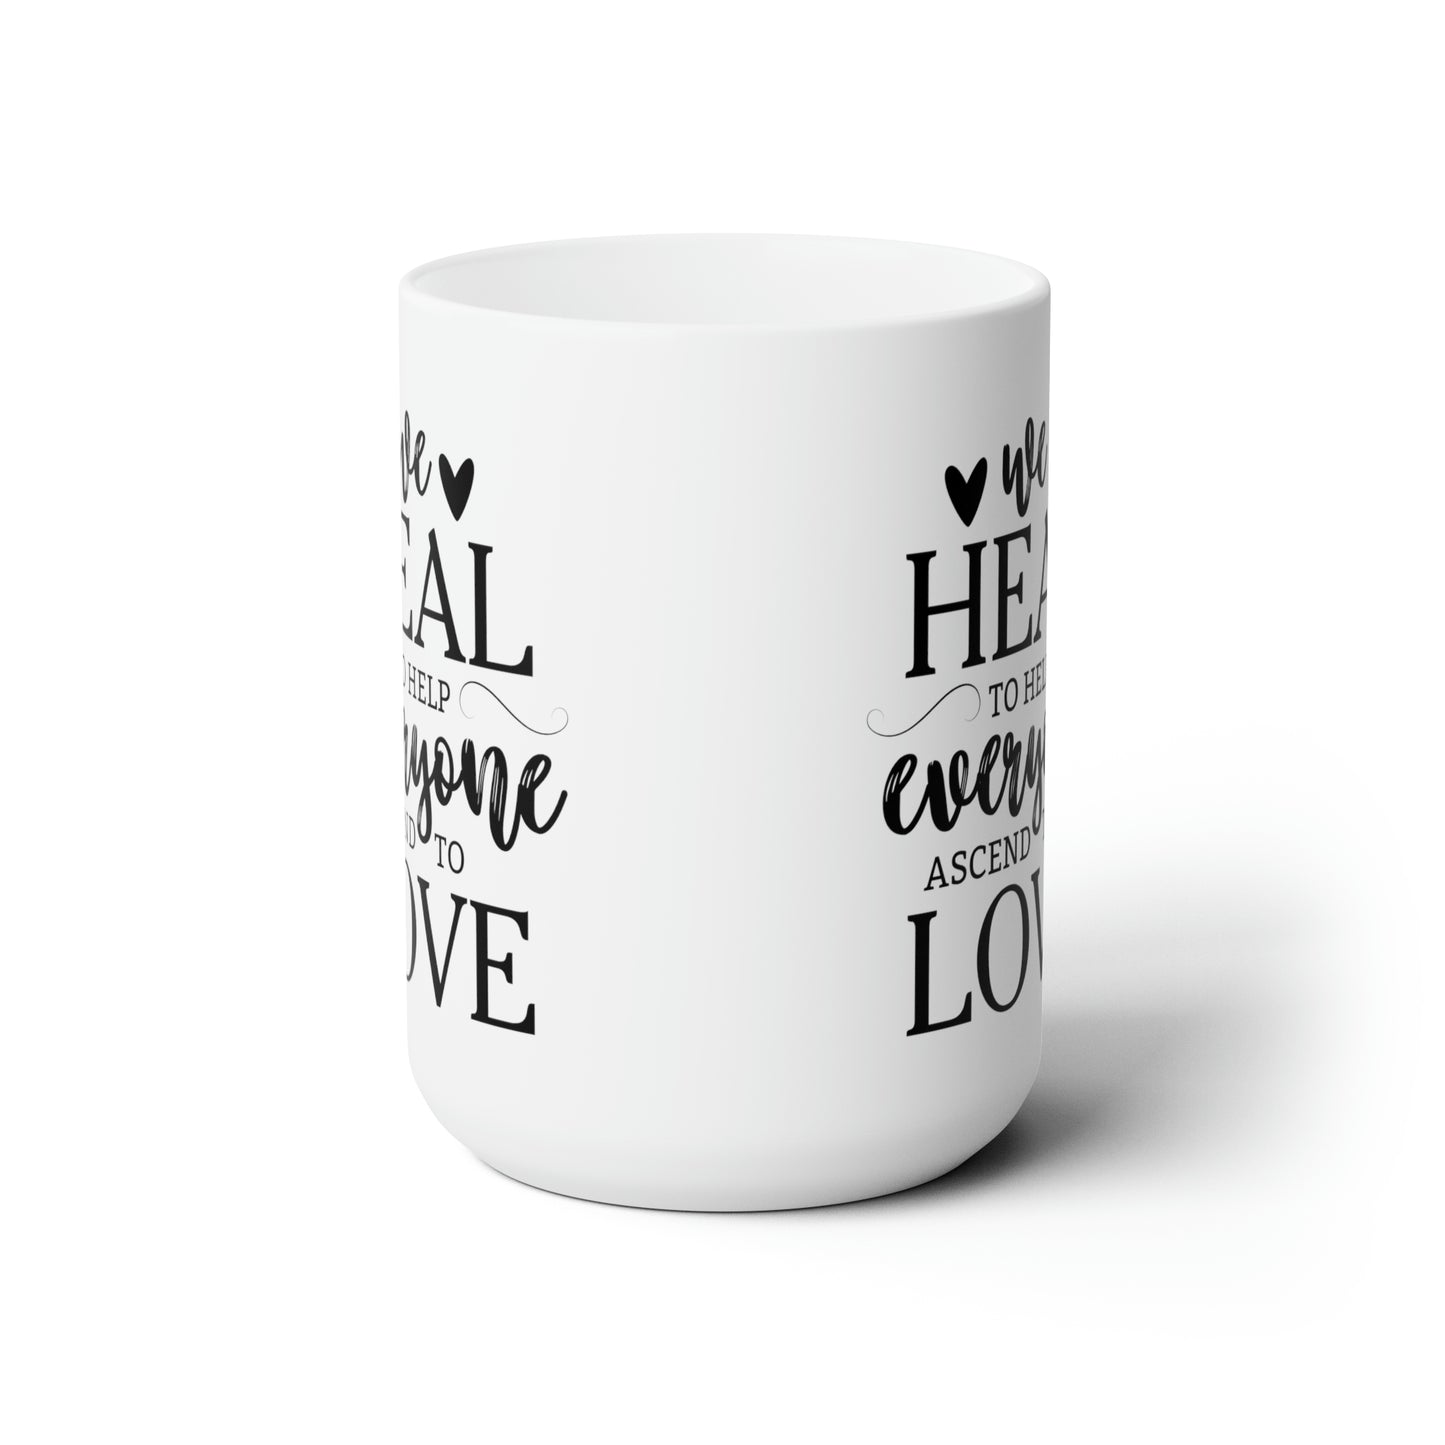 HEAL Helping Everyone Ascend to Love Mug